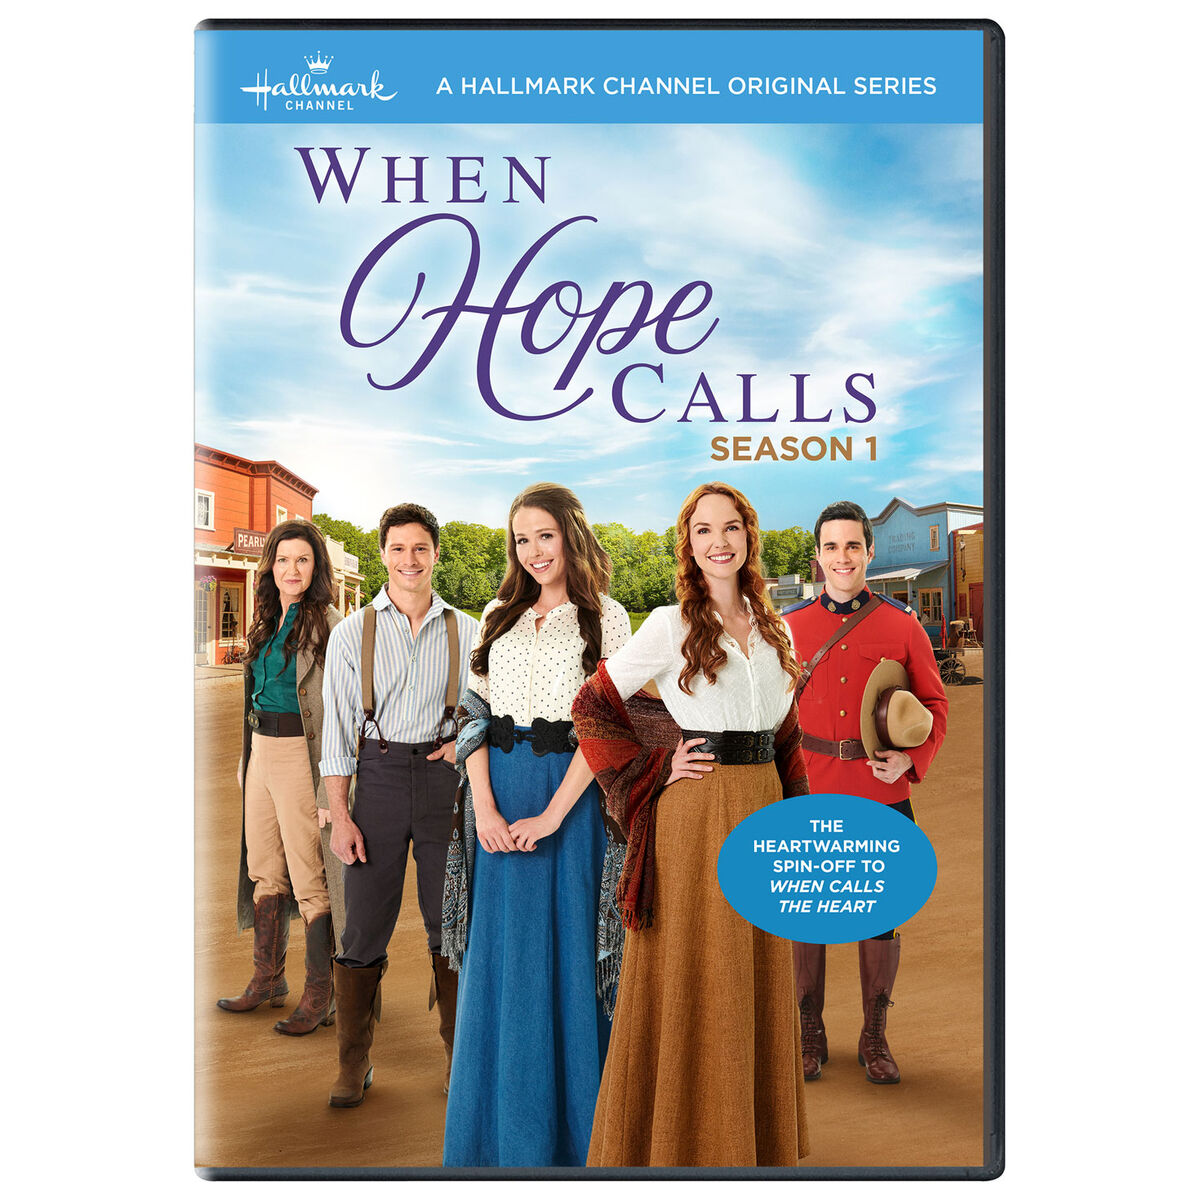 When Hope Calls: Season One Hallmark Channel DVD - Hallmark Channel - What Channel Will When Hope Calls Be On